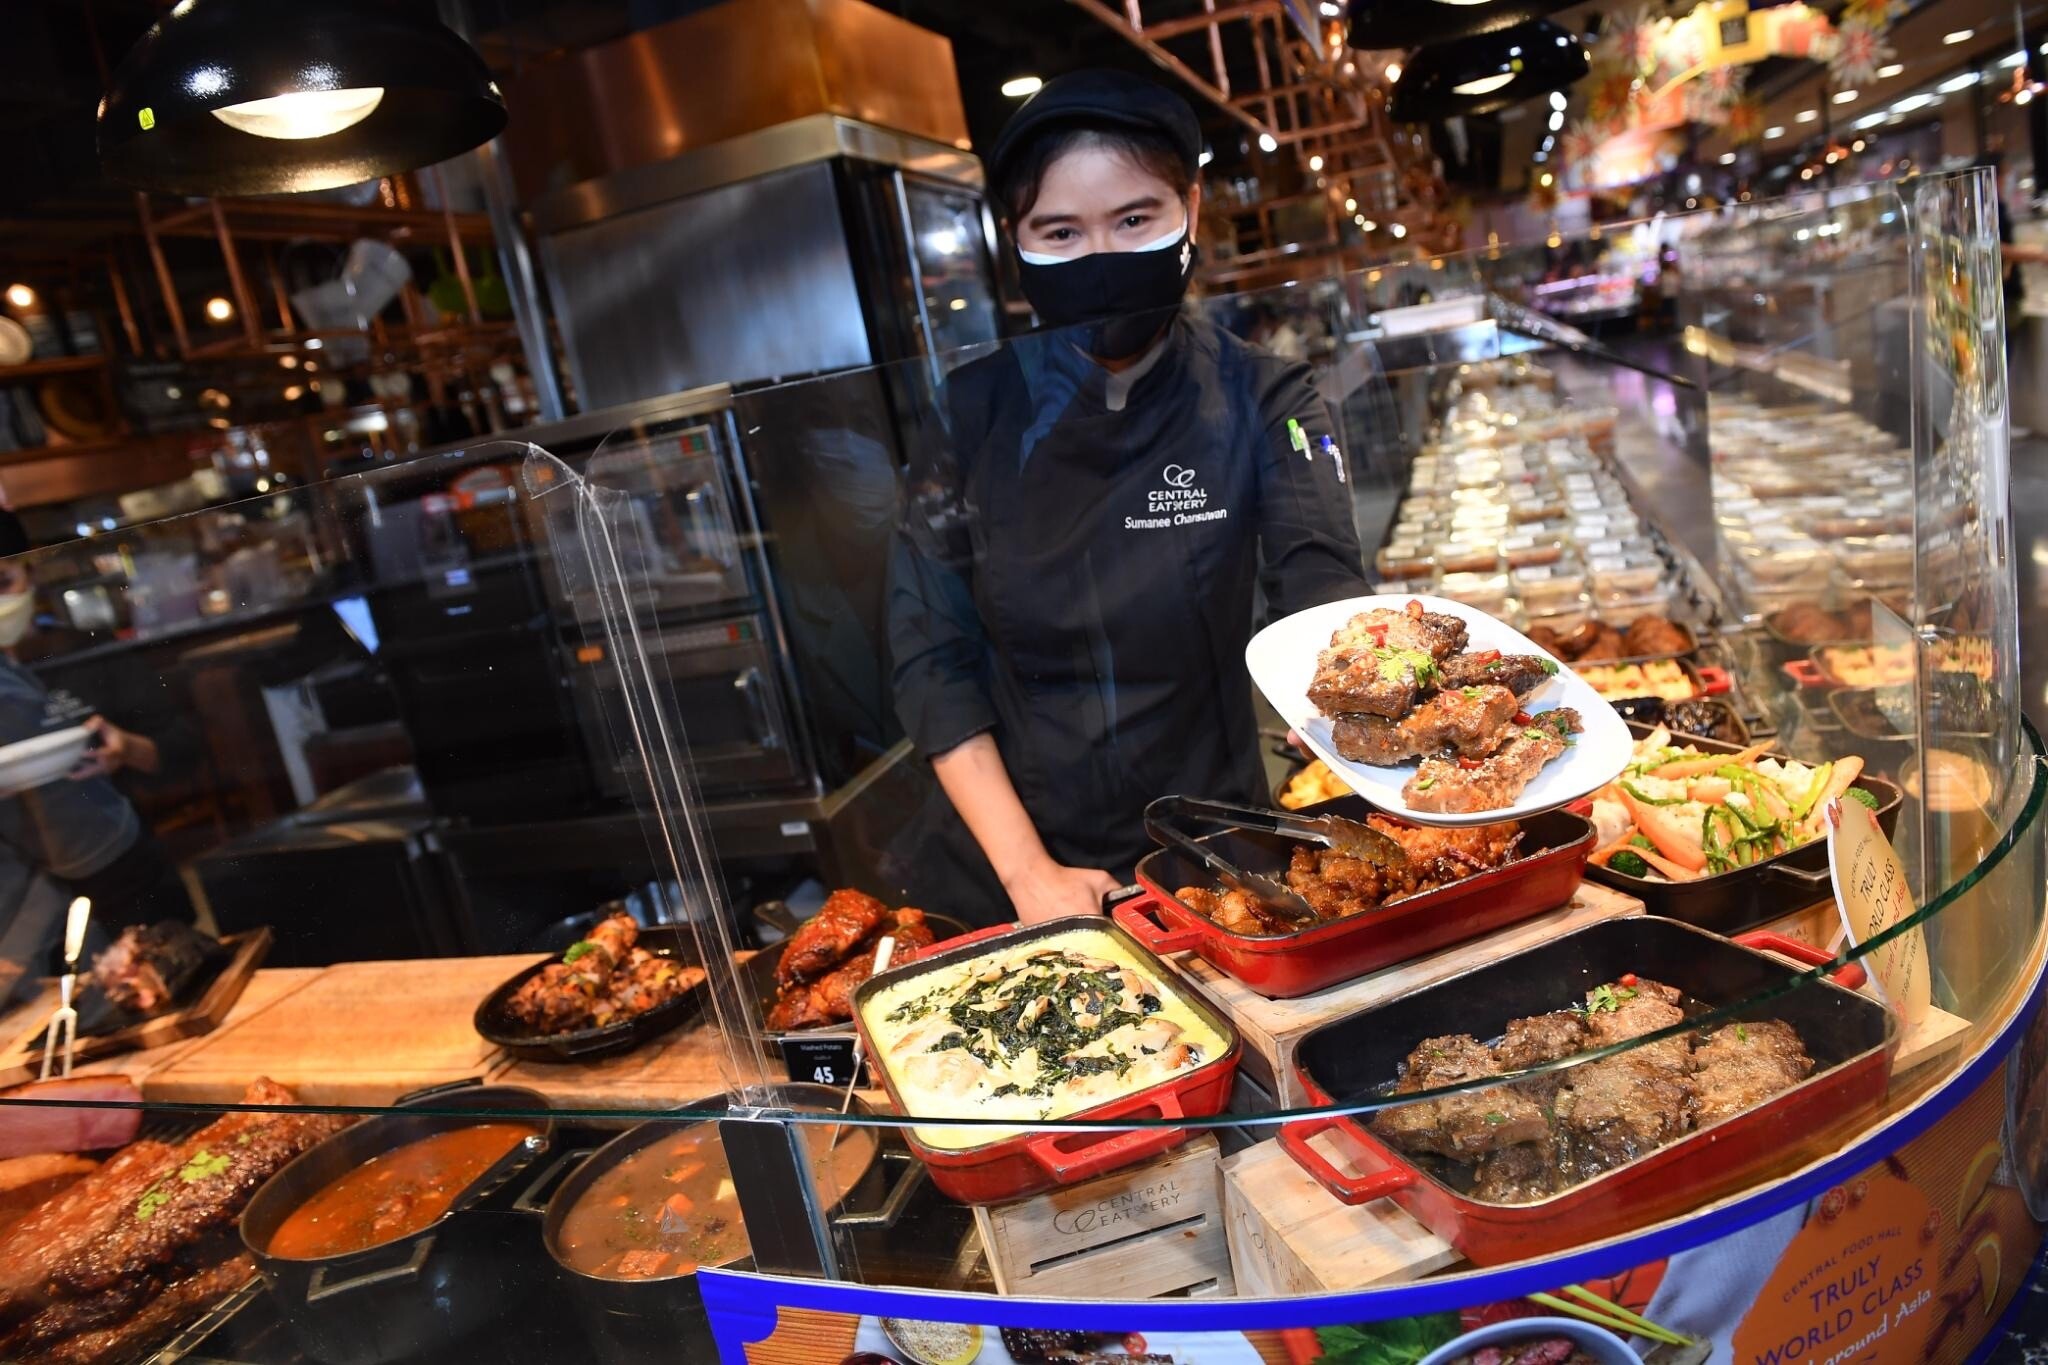 "Central Food Hall Truly World Class: Travel around Asia"  ยกระดับแห่งการพักผ่อนที่บ้าน ช้อปสินค้า อาหาร ระดับเวิลด์คลาสทั่วทวีปเอเชีย